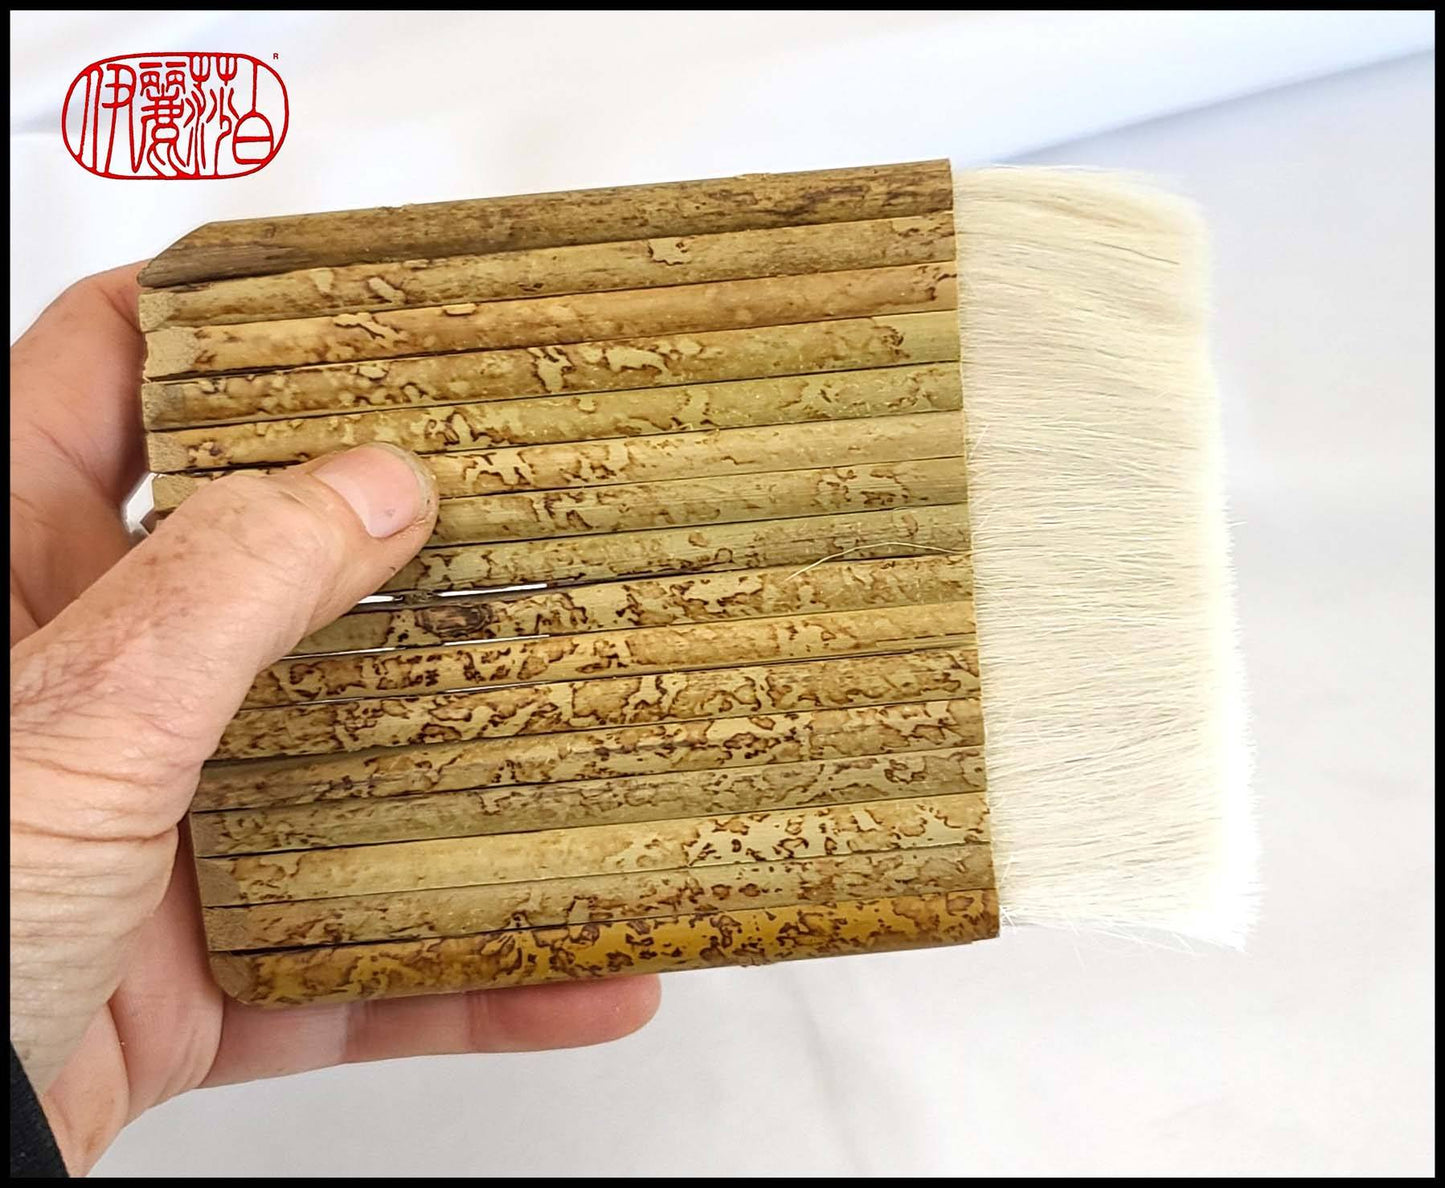 Bamboo Section Hake Brushes 4" Art Supplies Elizabeth Schowachert